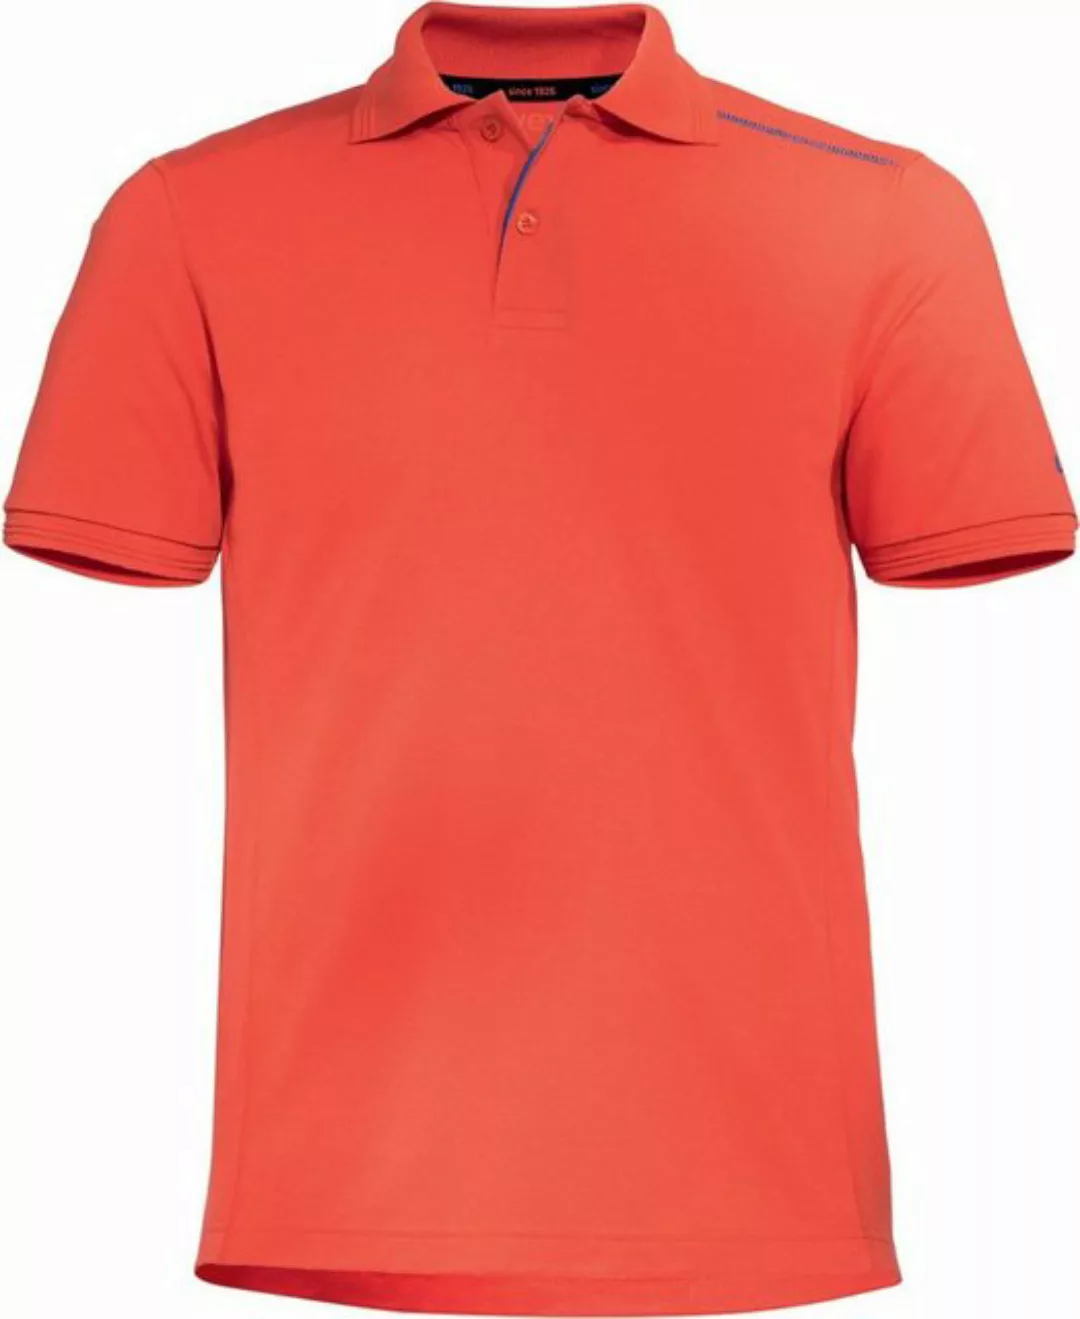 Uvex Poloshirt Poloshirt suXXeed orange, chili günstig online kaufen